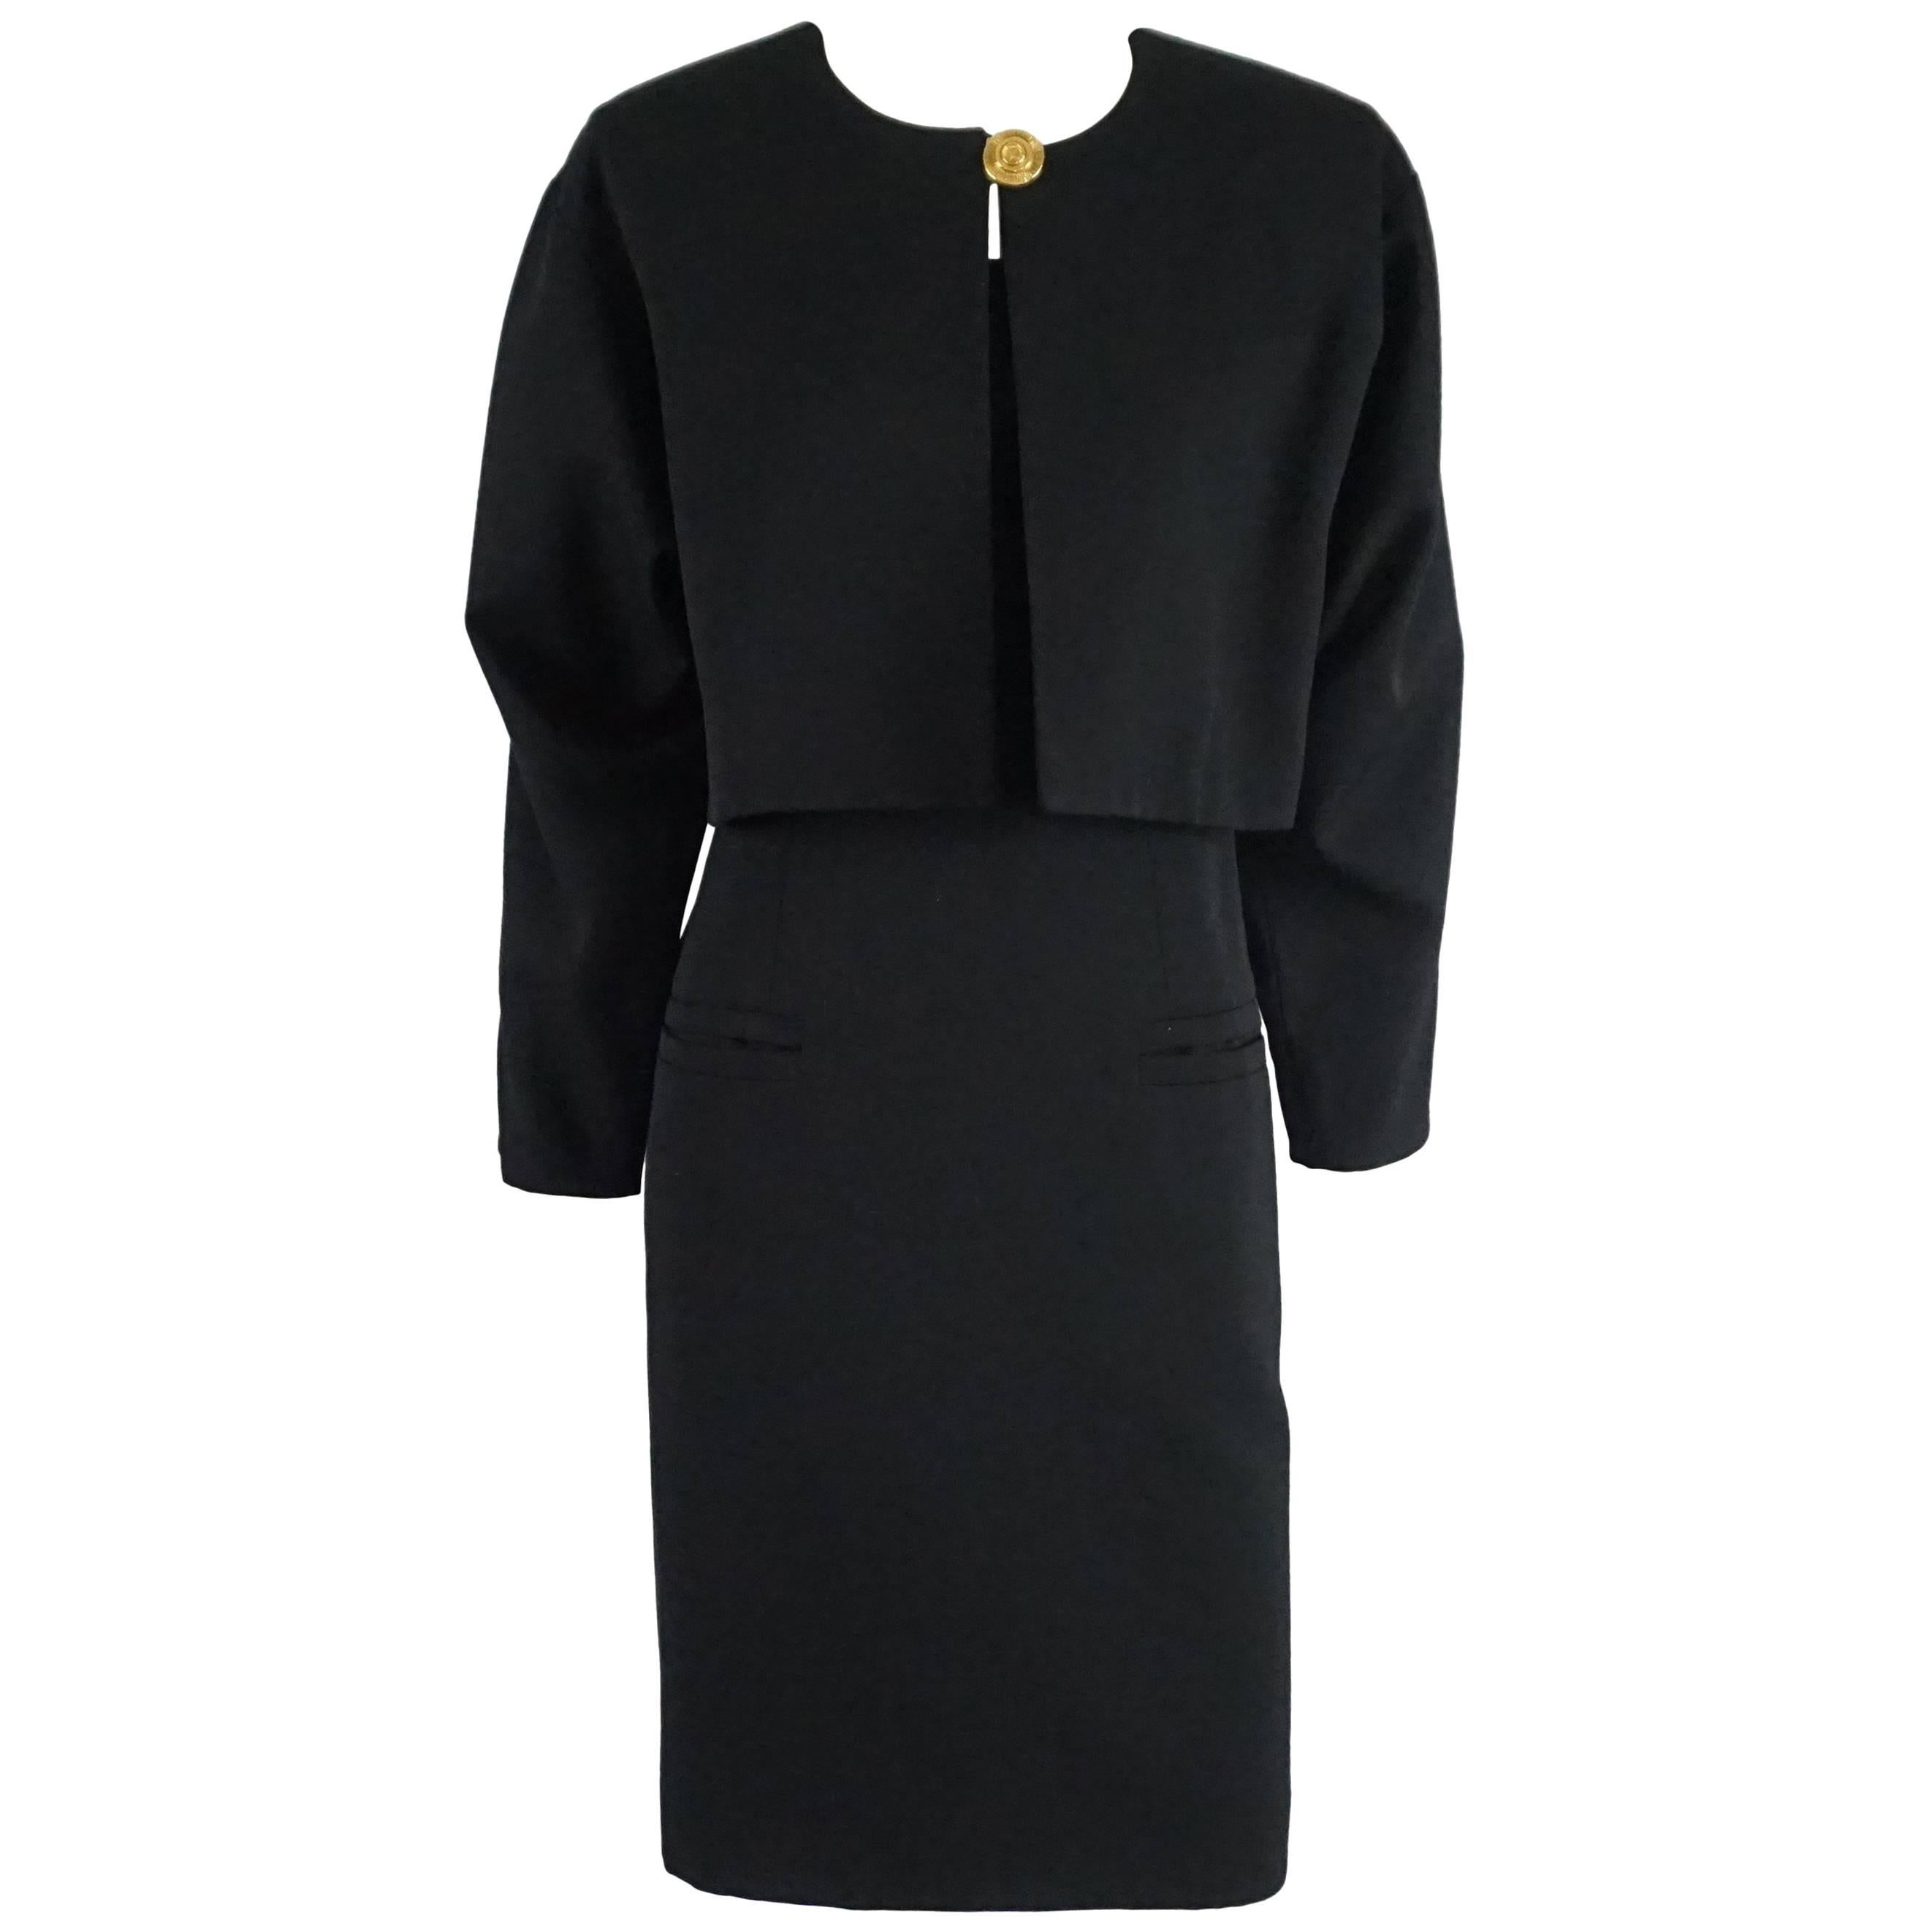 Yves Saint Laurent Black Dress with Bolero Jacket - 34 - Circa 90's For Sale